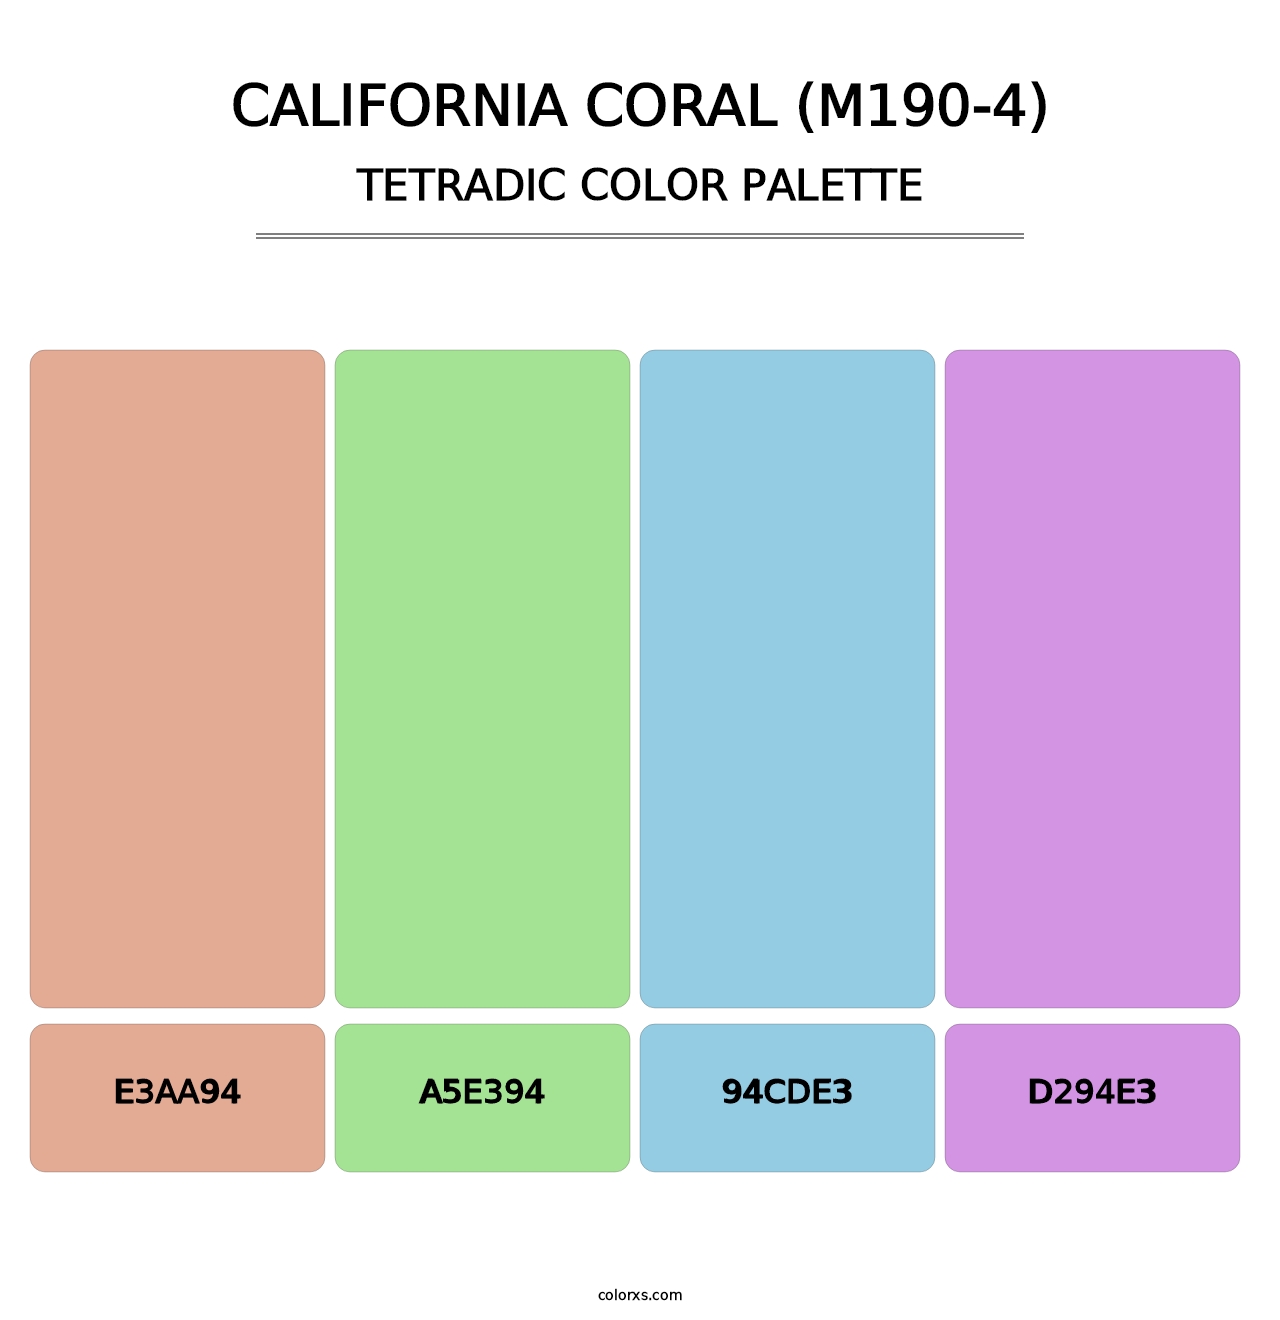 California Coral (M190-4) - Tetradic Color Palette